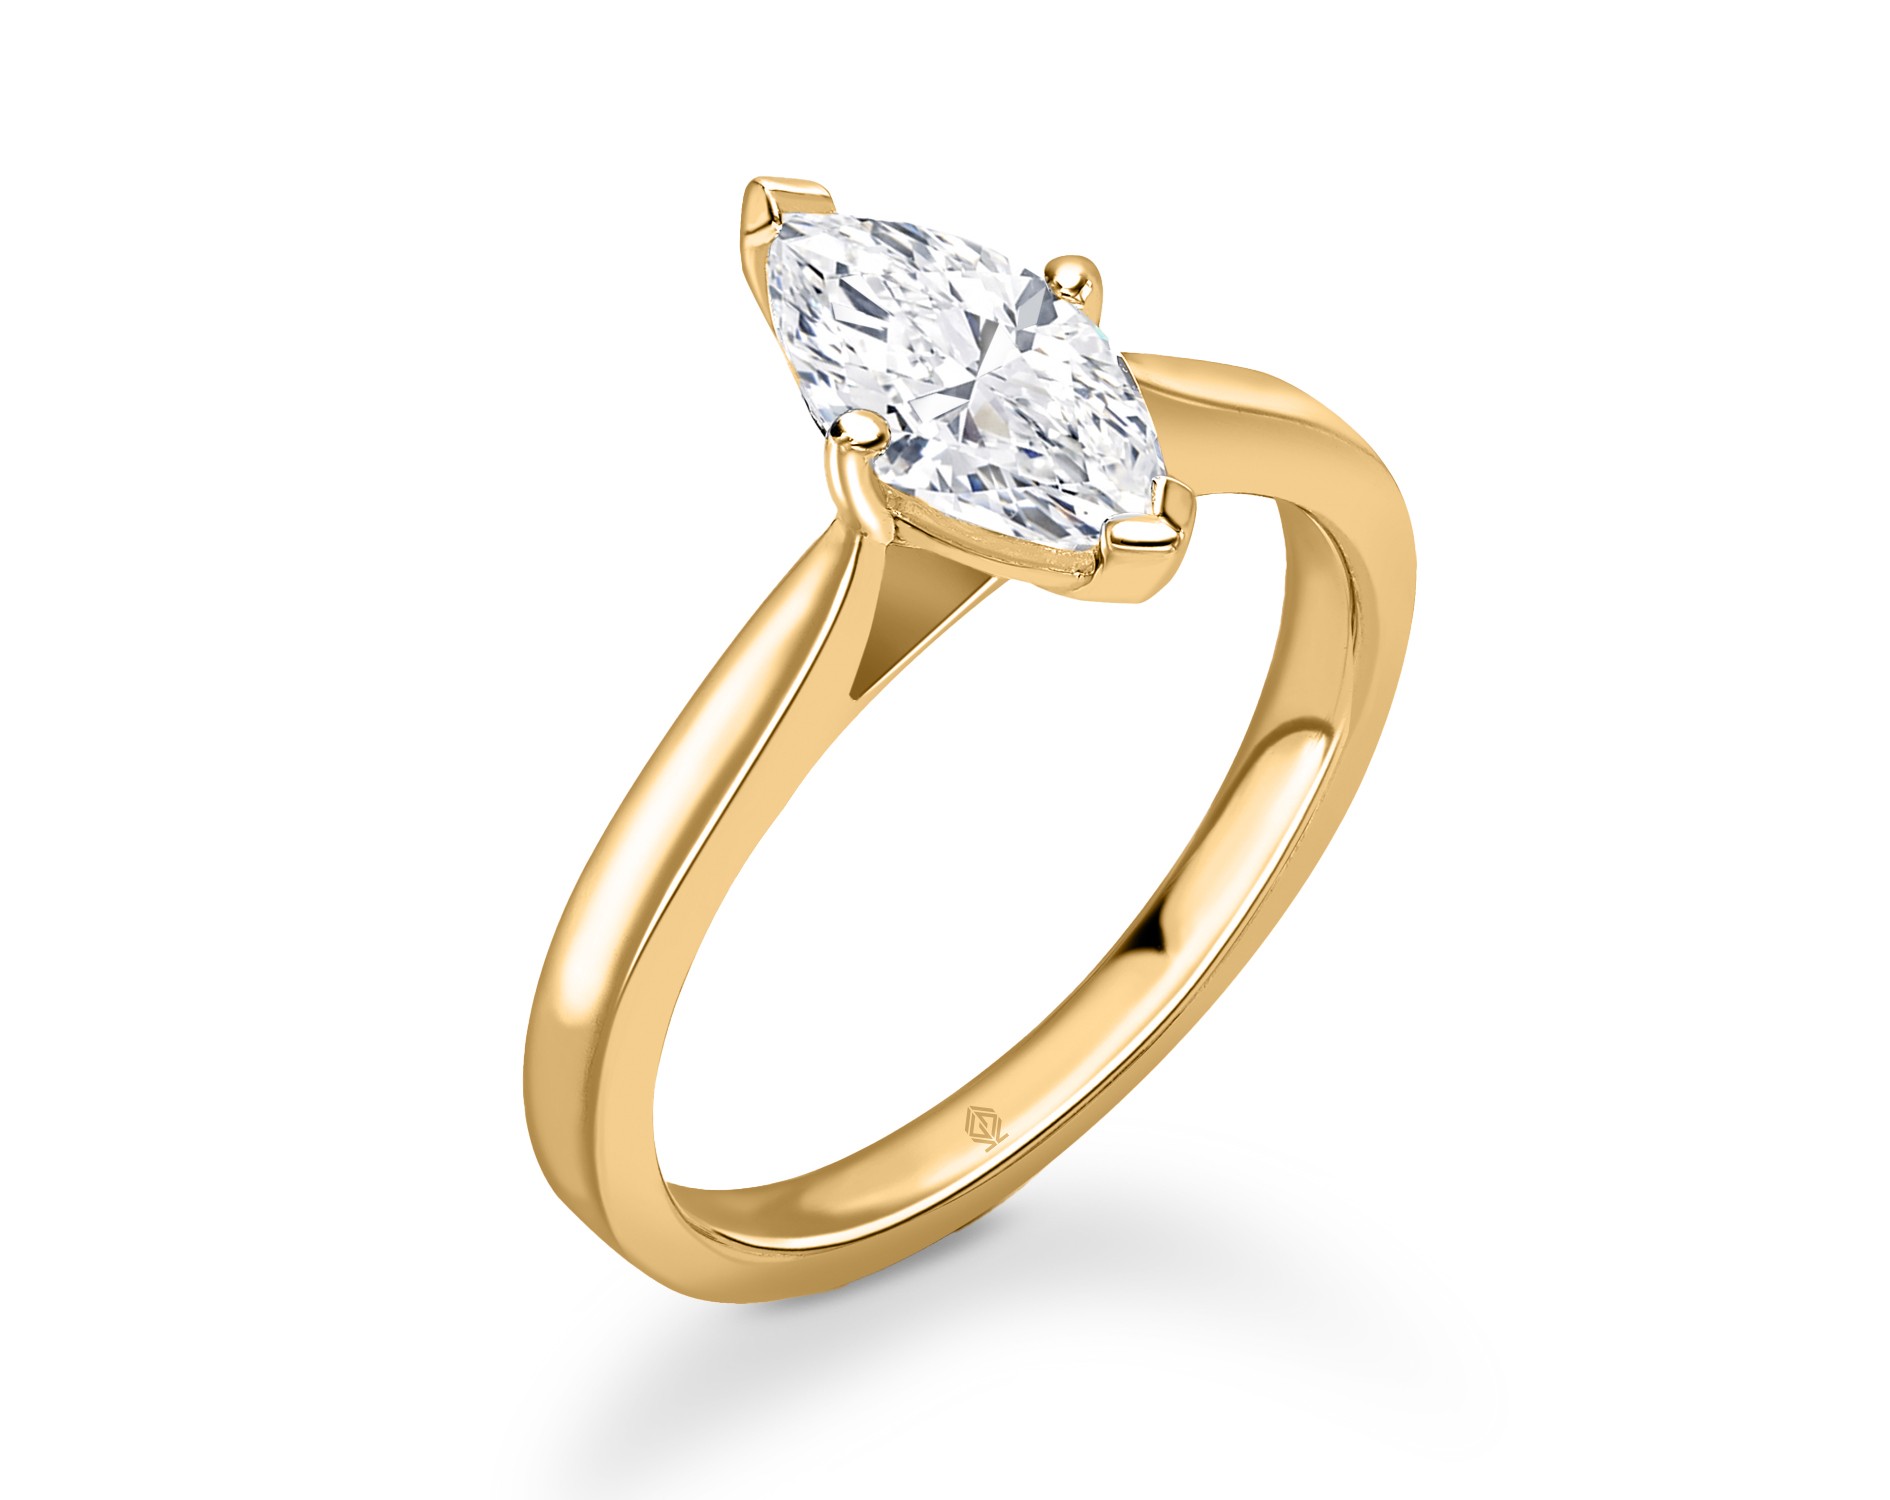 18K YELLOW GOLD 4 PRONGS MARQUISE CUT DIAMOND ENGAGEMENT RING